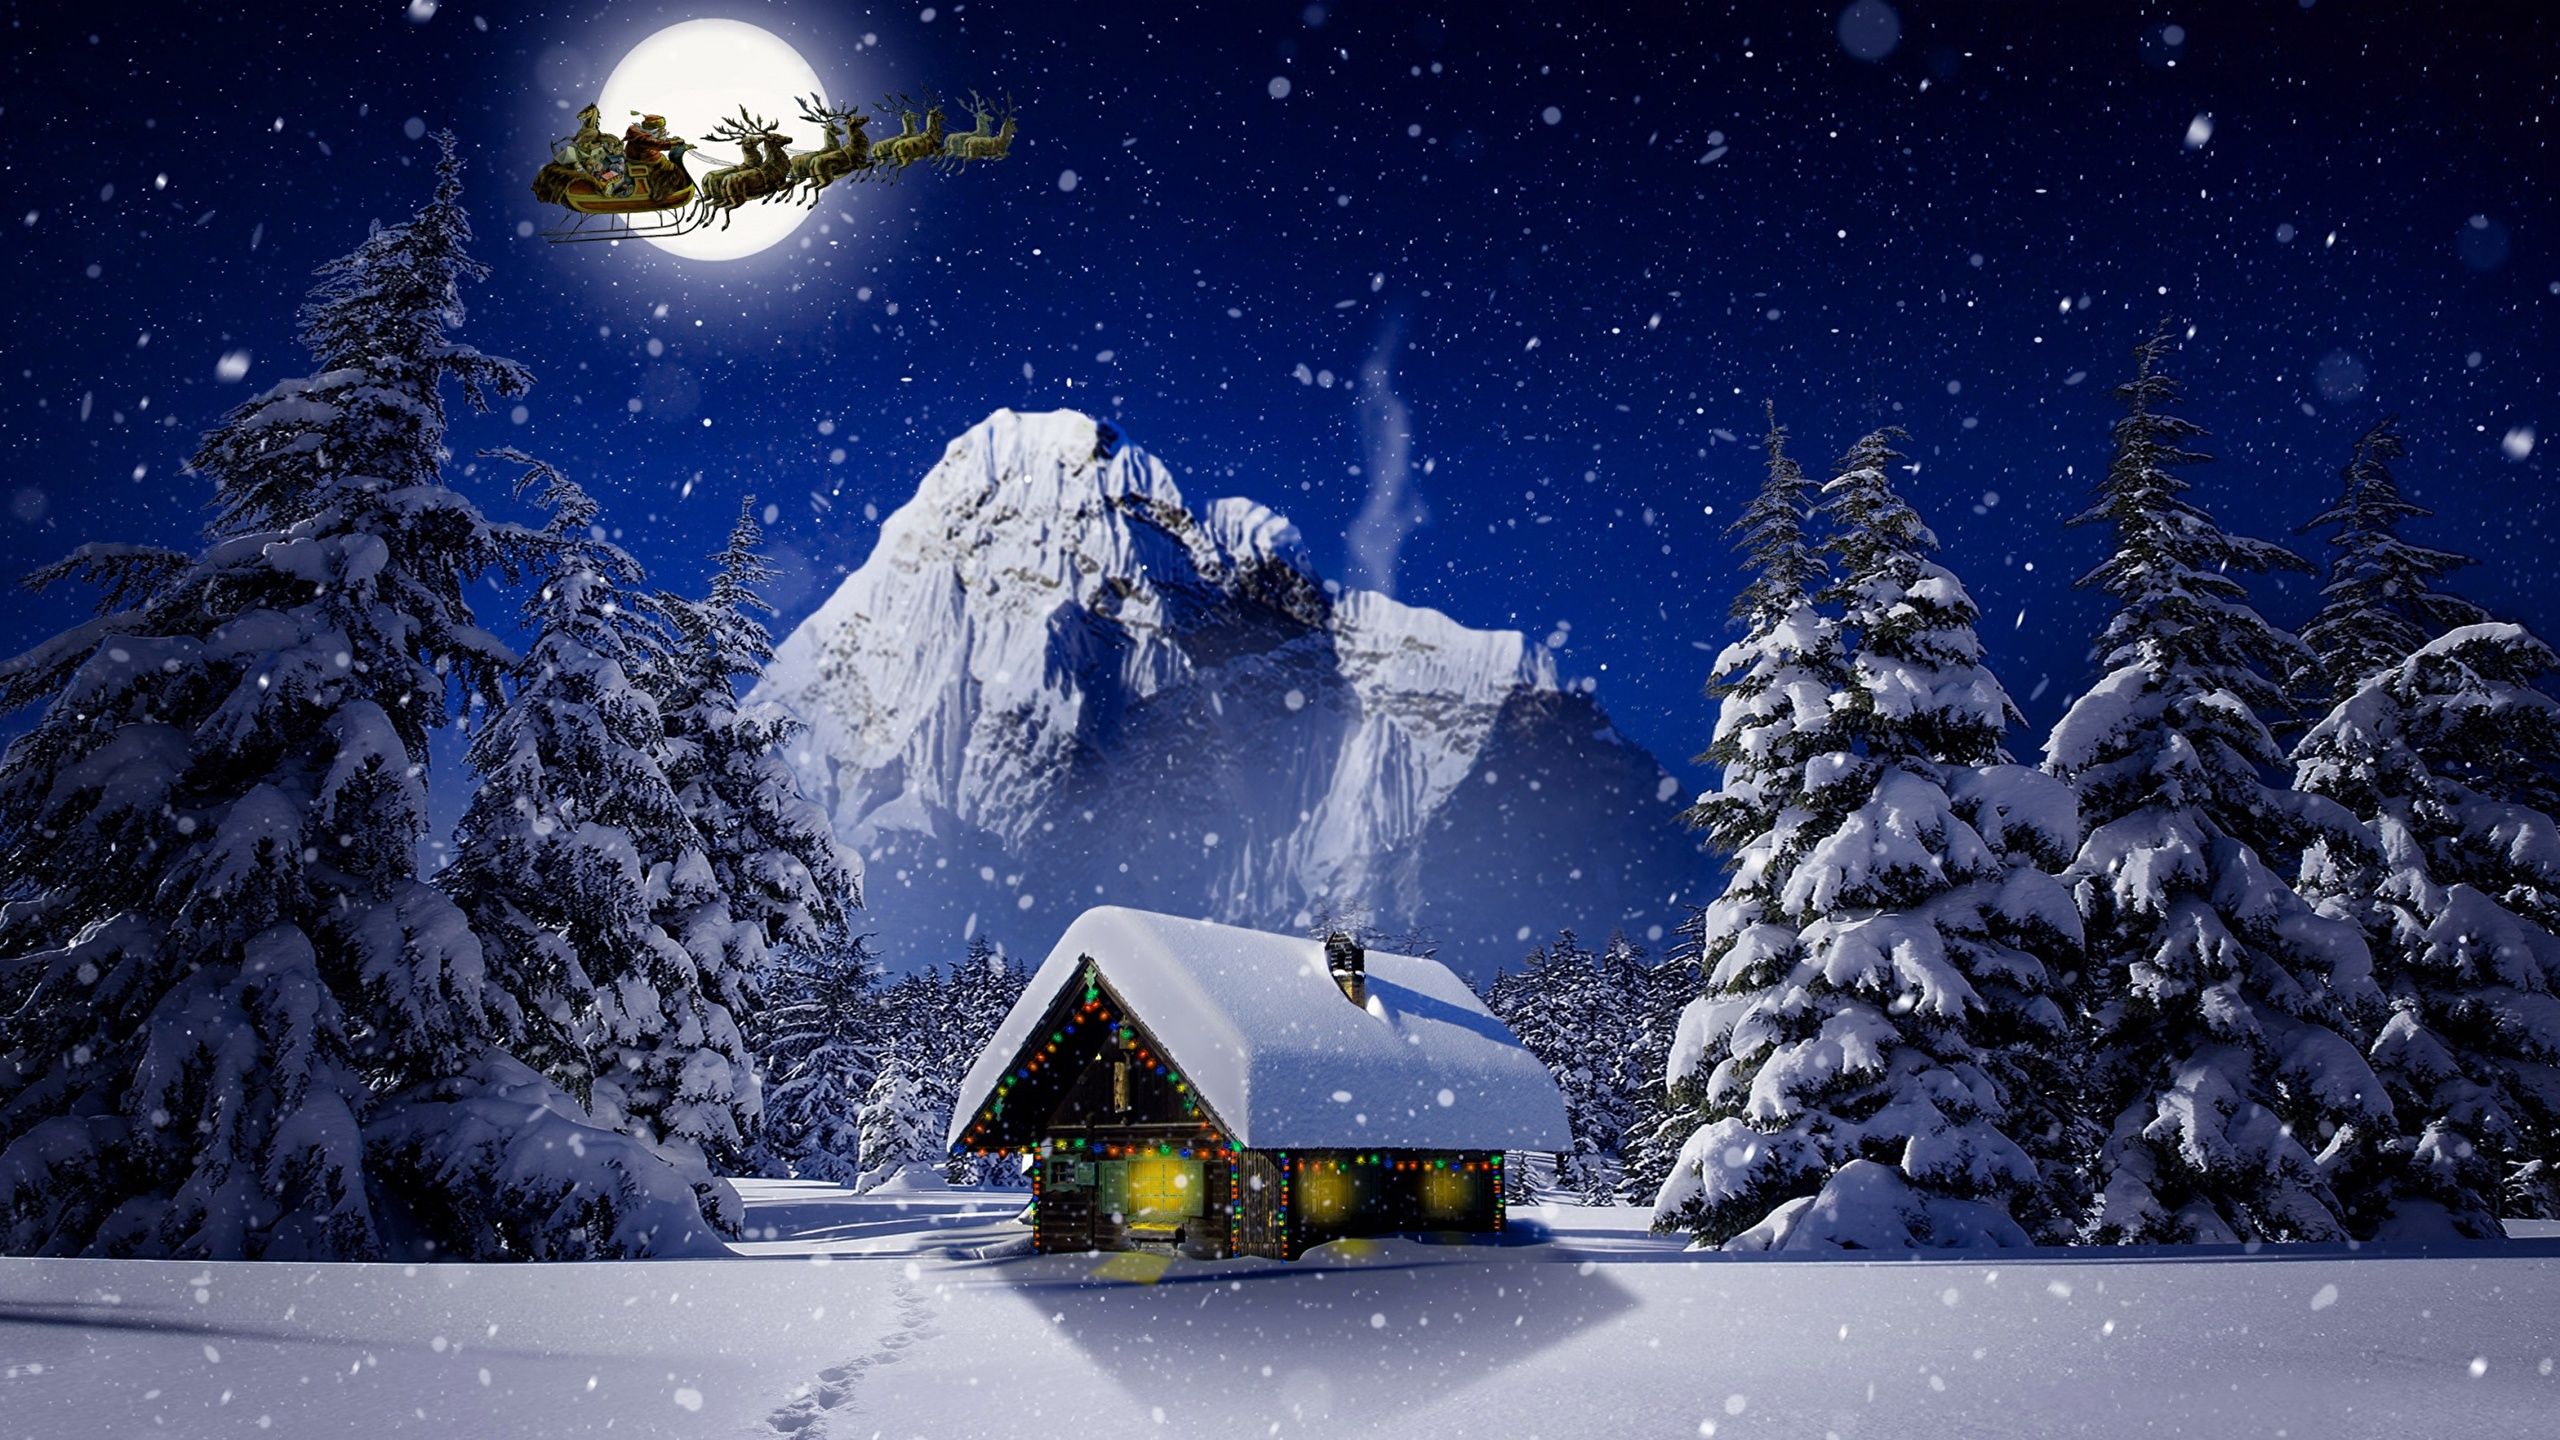 image Deer Christmas sleigh Nature Winter Moon Snow night 2560x1440